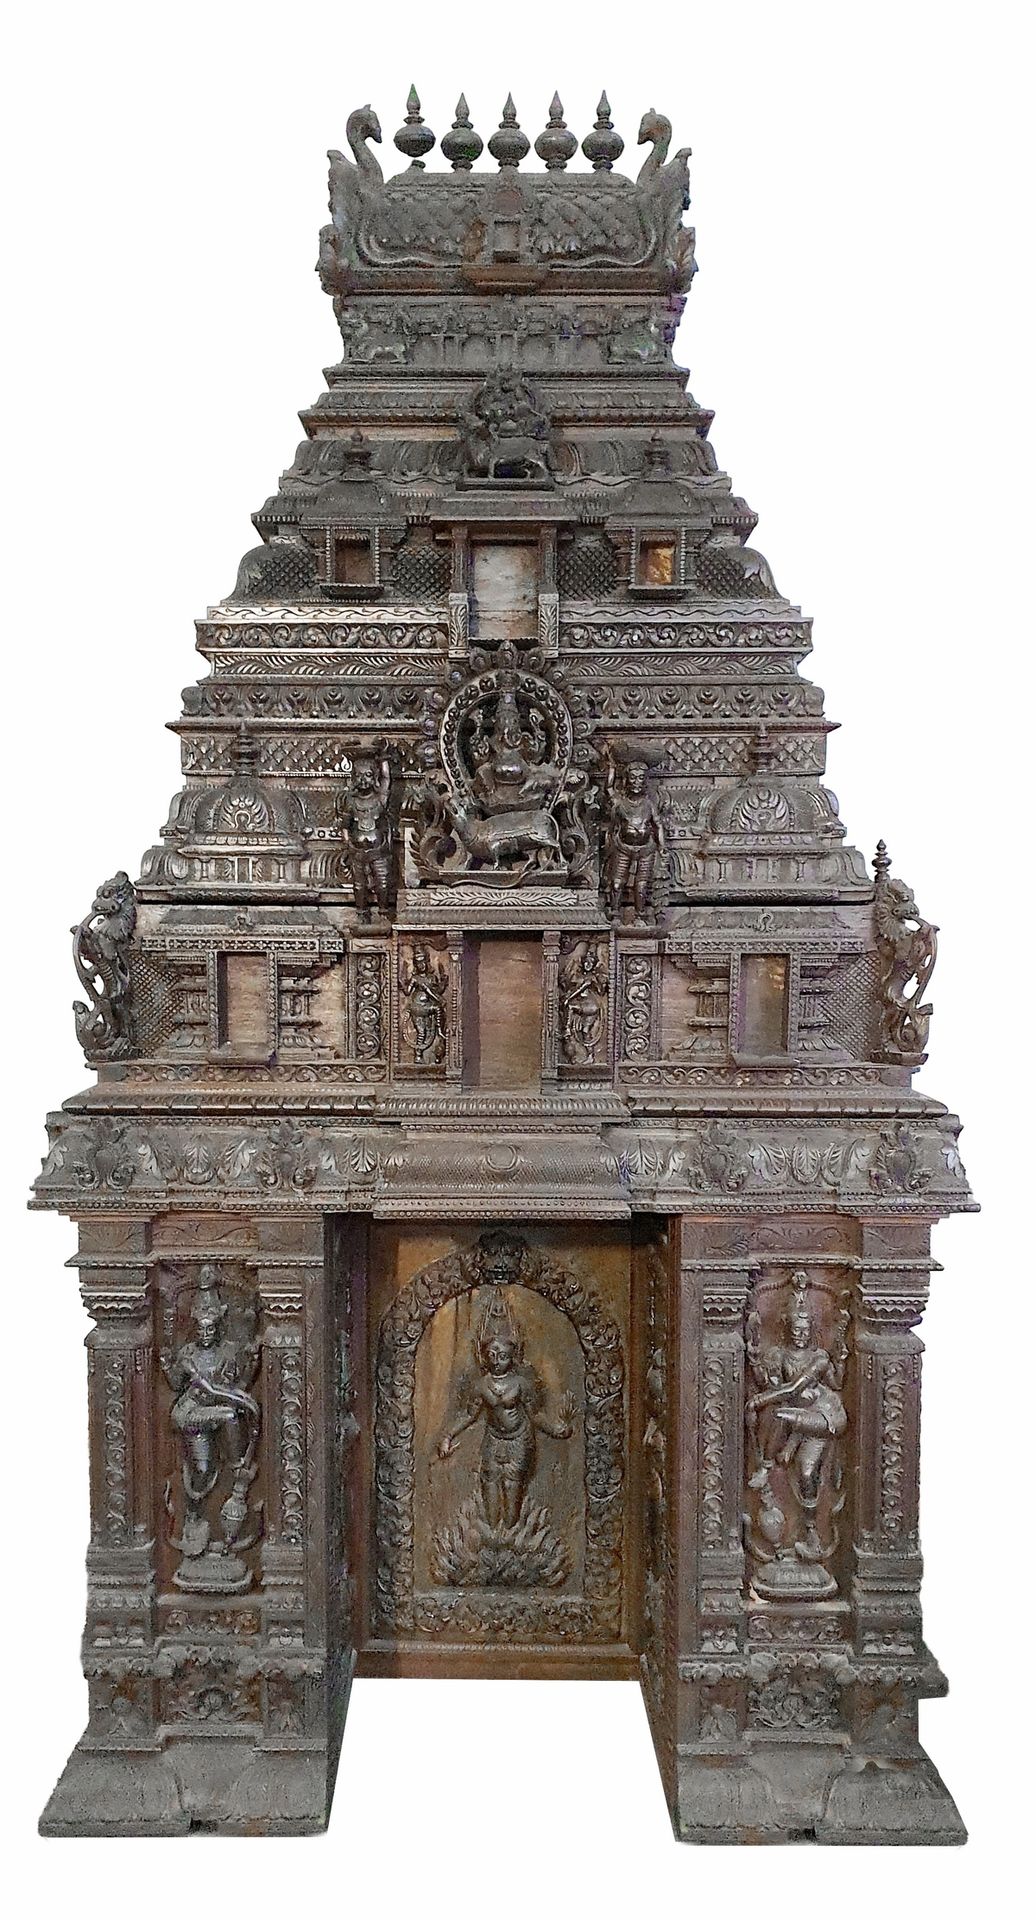 ASIE, début 20ème SIECLE 非常令人印象深刻的佛教寺庙
用异国的硬木制成，雕刻着丰富的神灵，动物，马达加斯加，龙头，卷轴等。它的前面有壁龛&hellip;